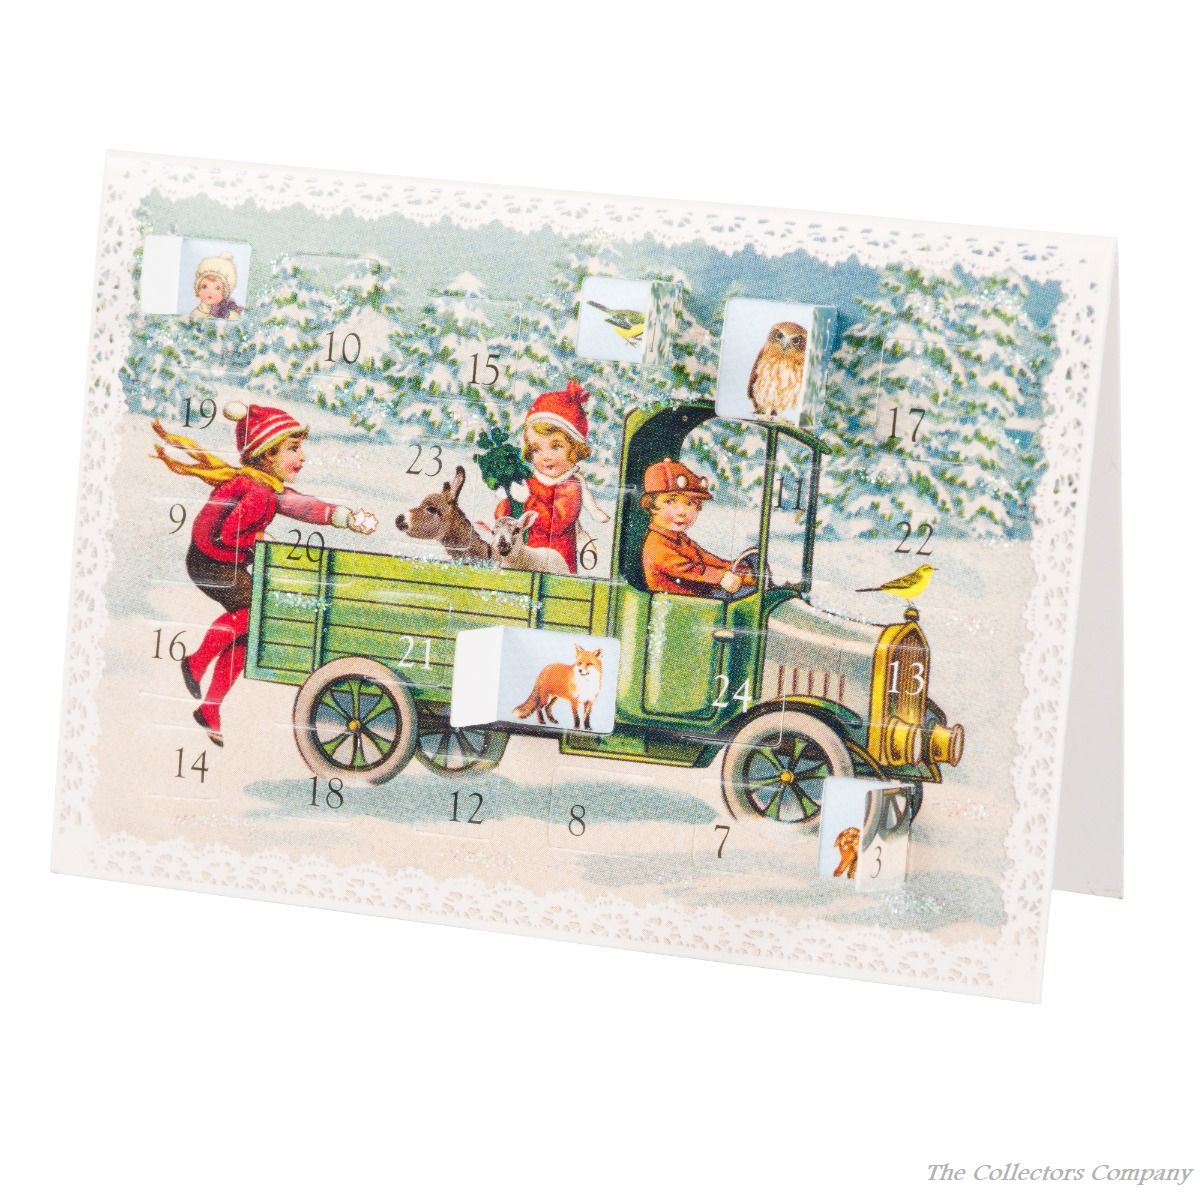 Coppenrath Miniature Edwardian Style Advent Calendar Cards 92360